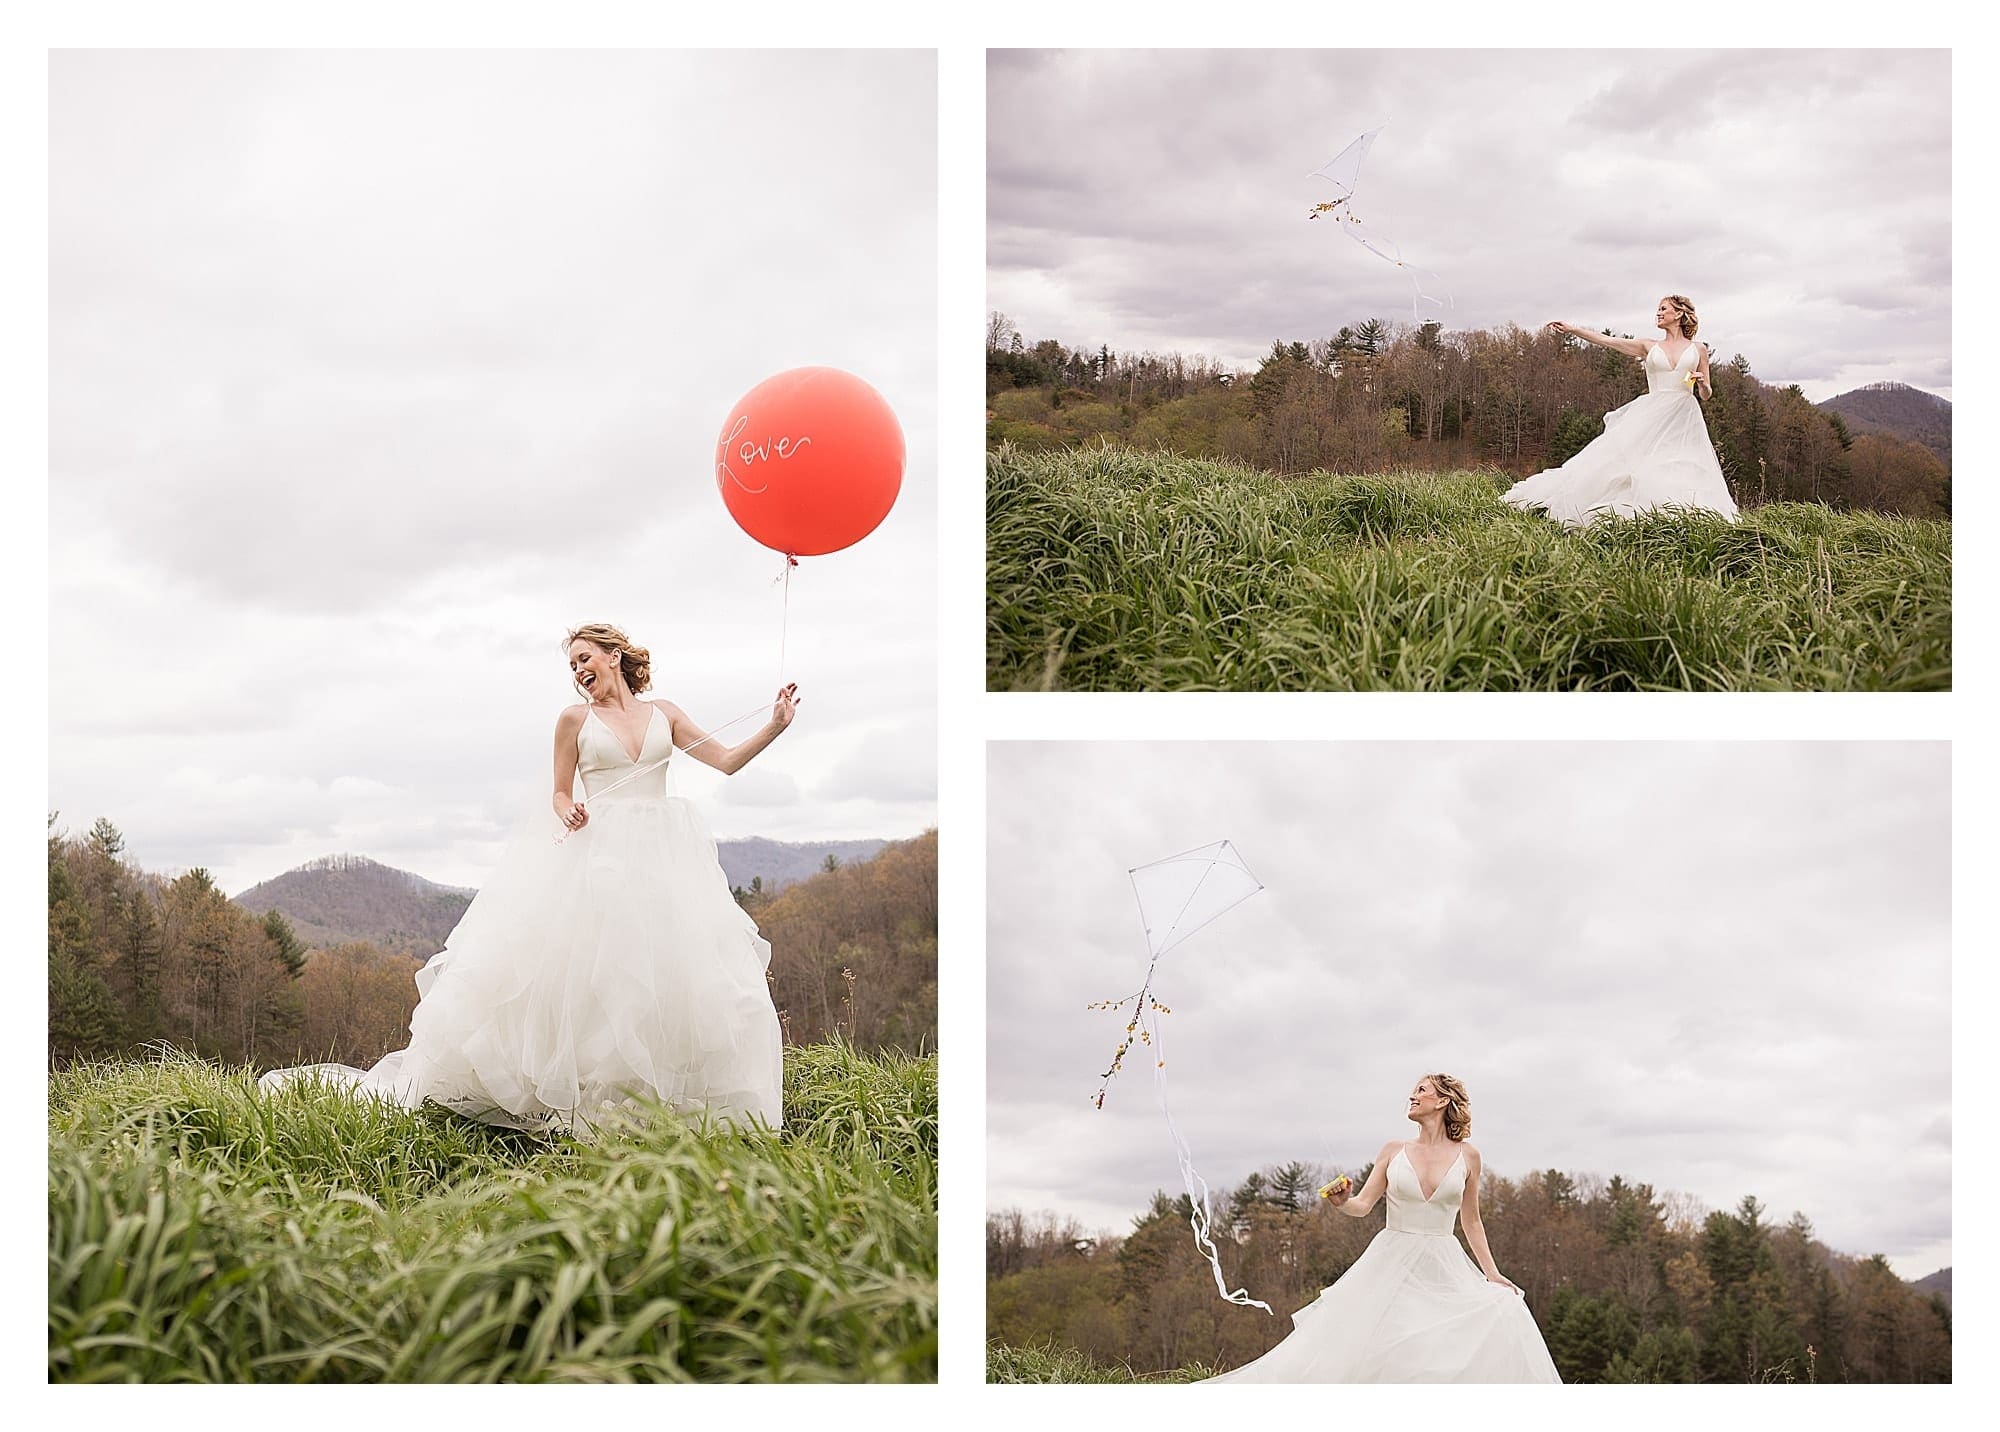 Bride in wedding dress holding red balloon in grassy field